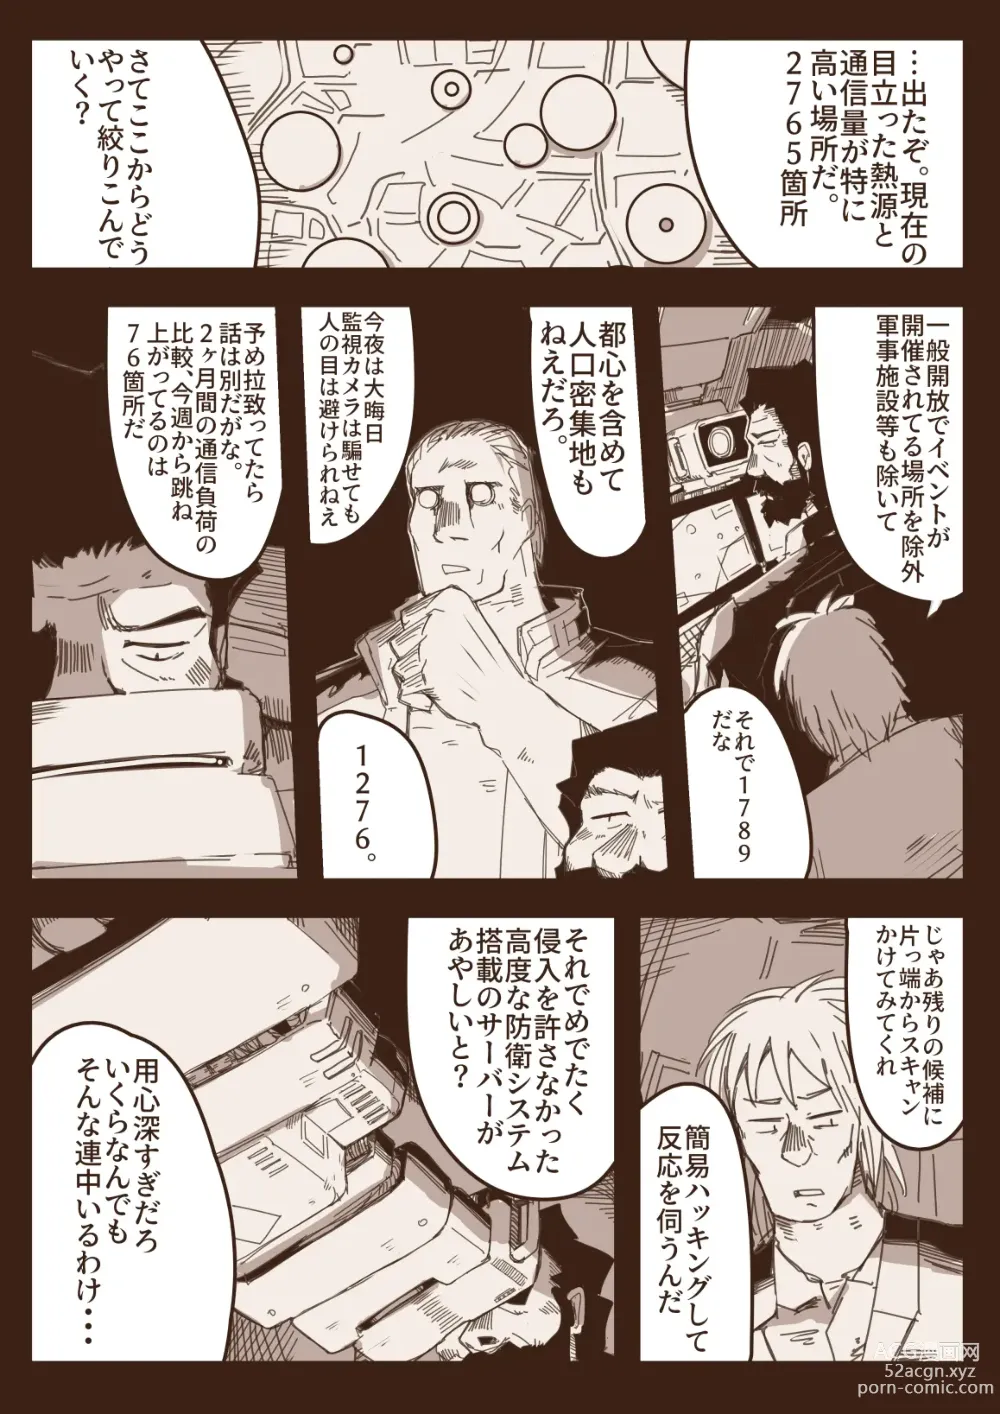 Page 7 of doujinshi Ryona no Kane 2020